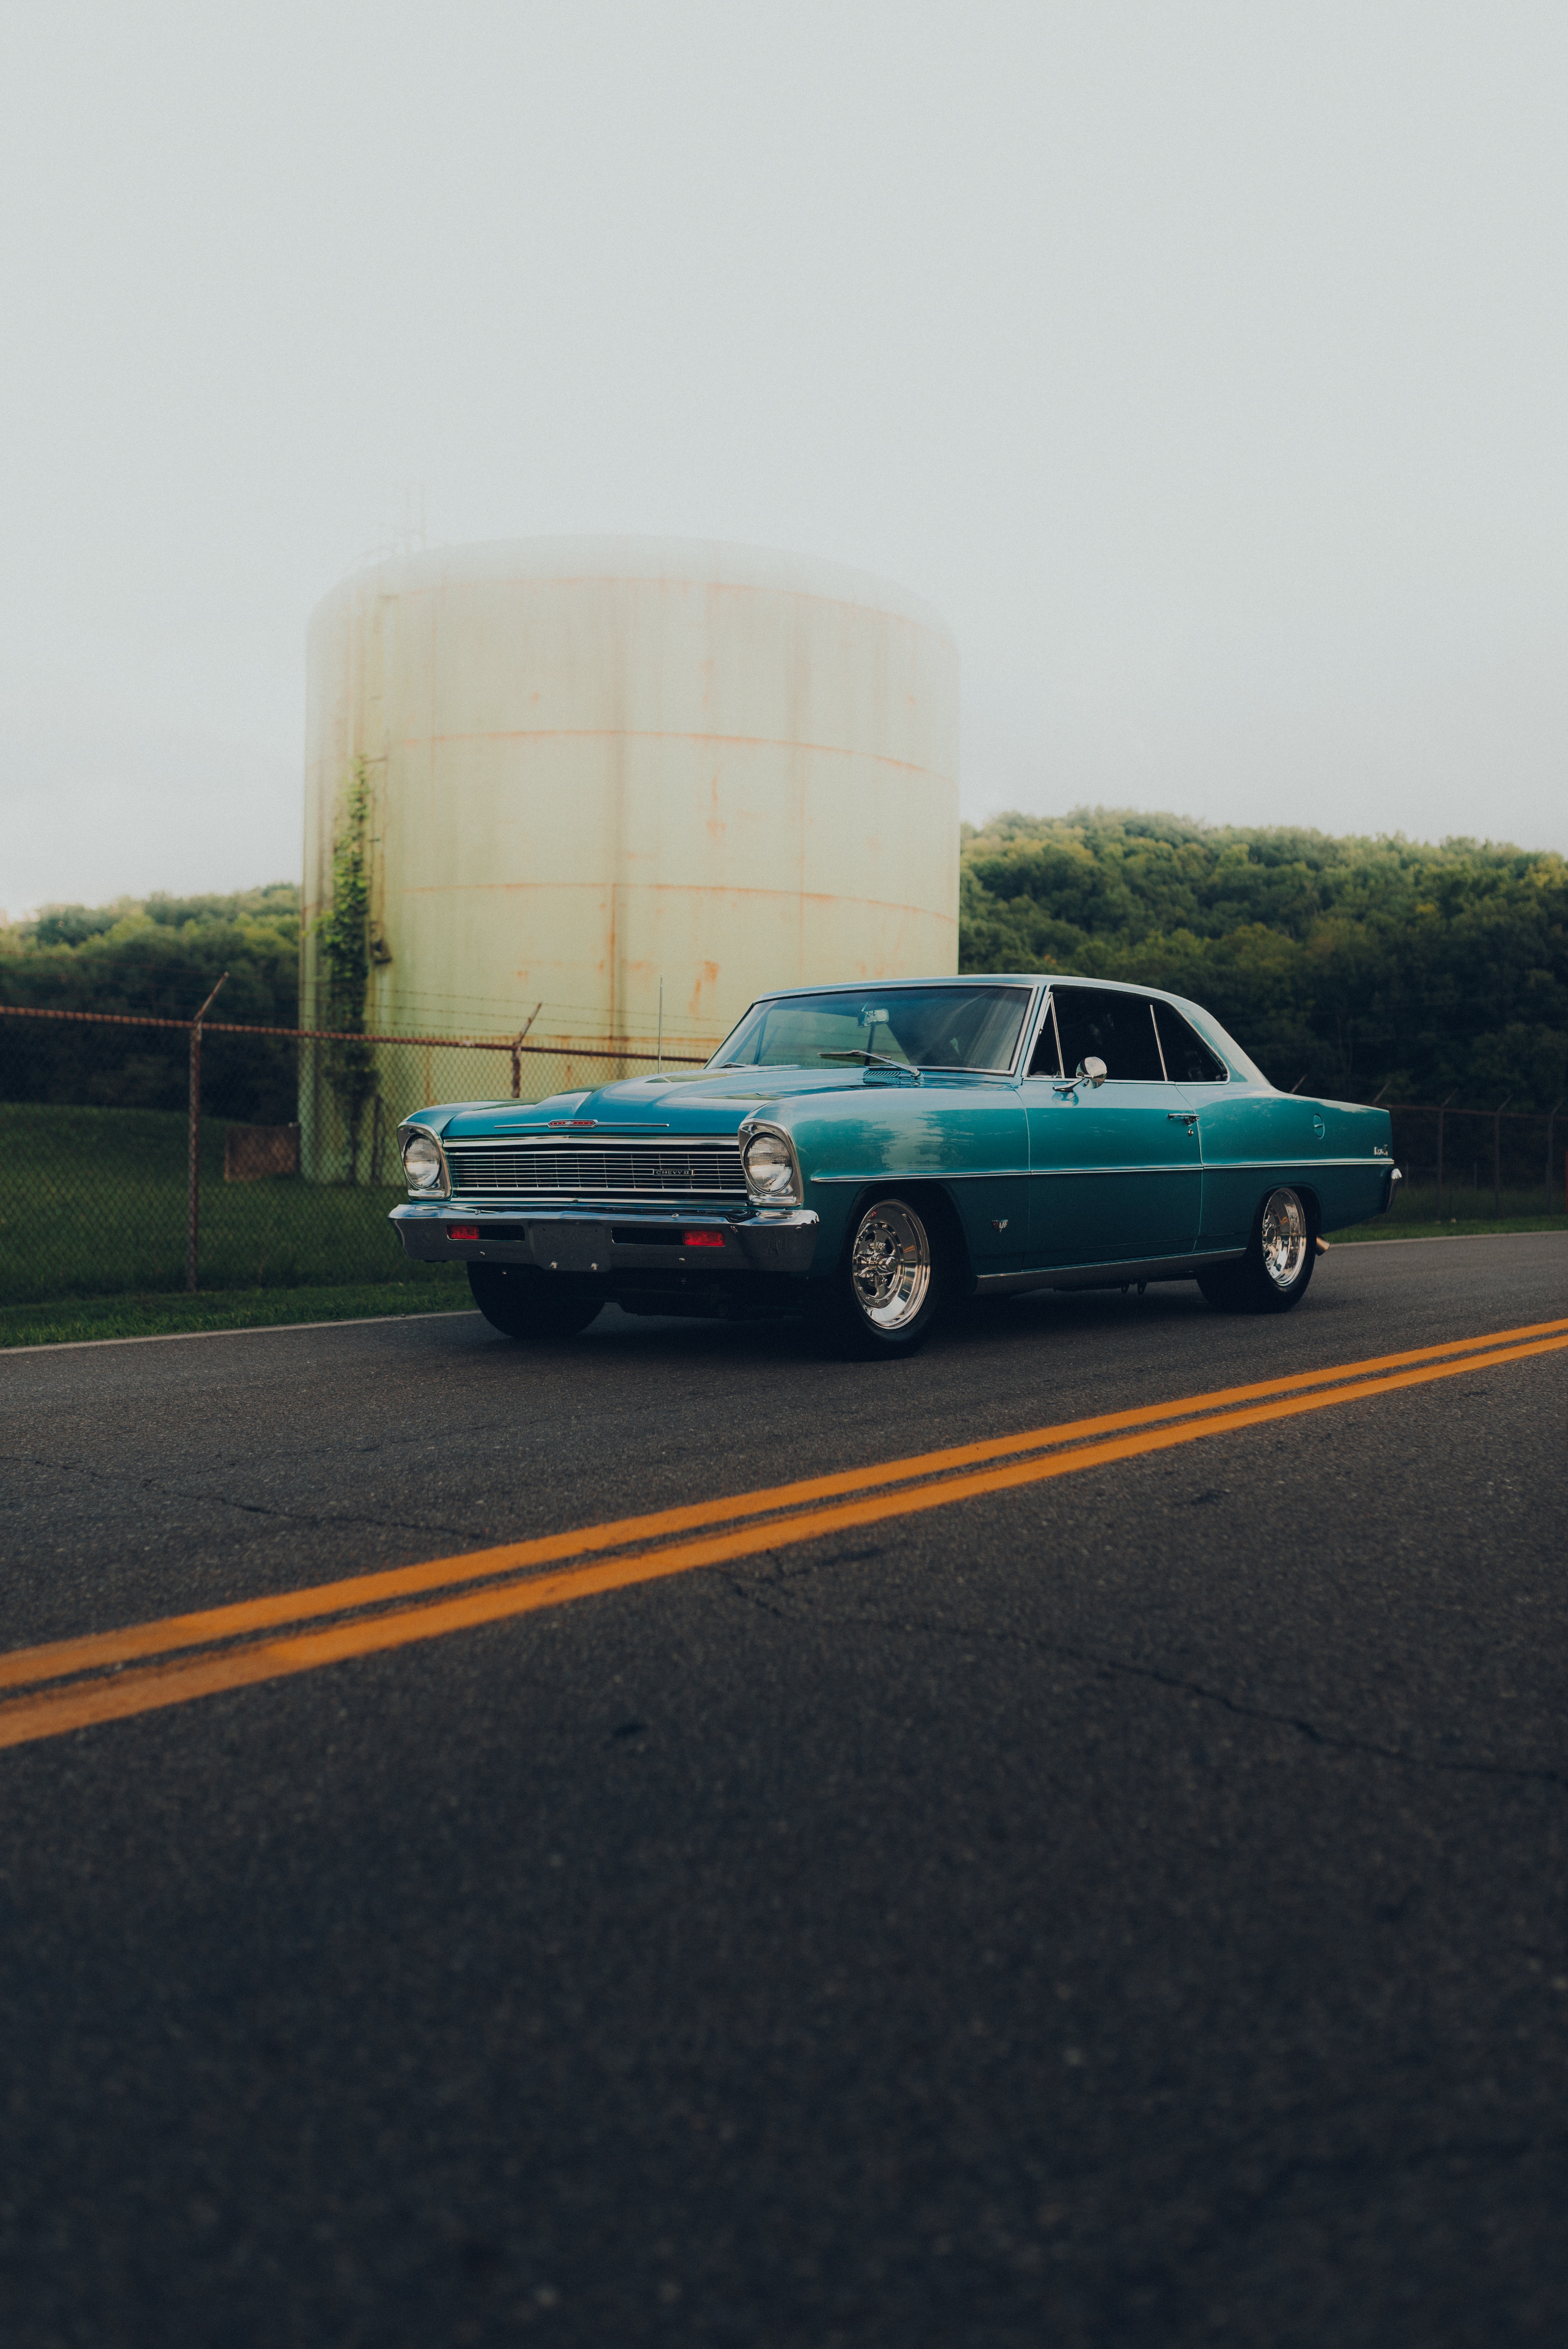 retro, vintage, cars, blue, road, car, side view